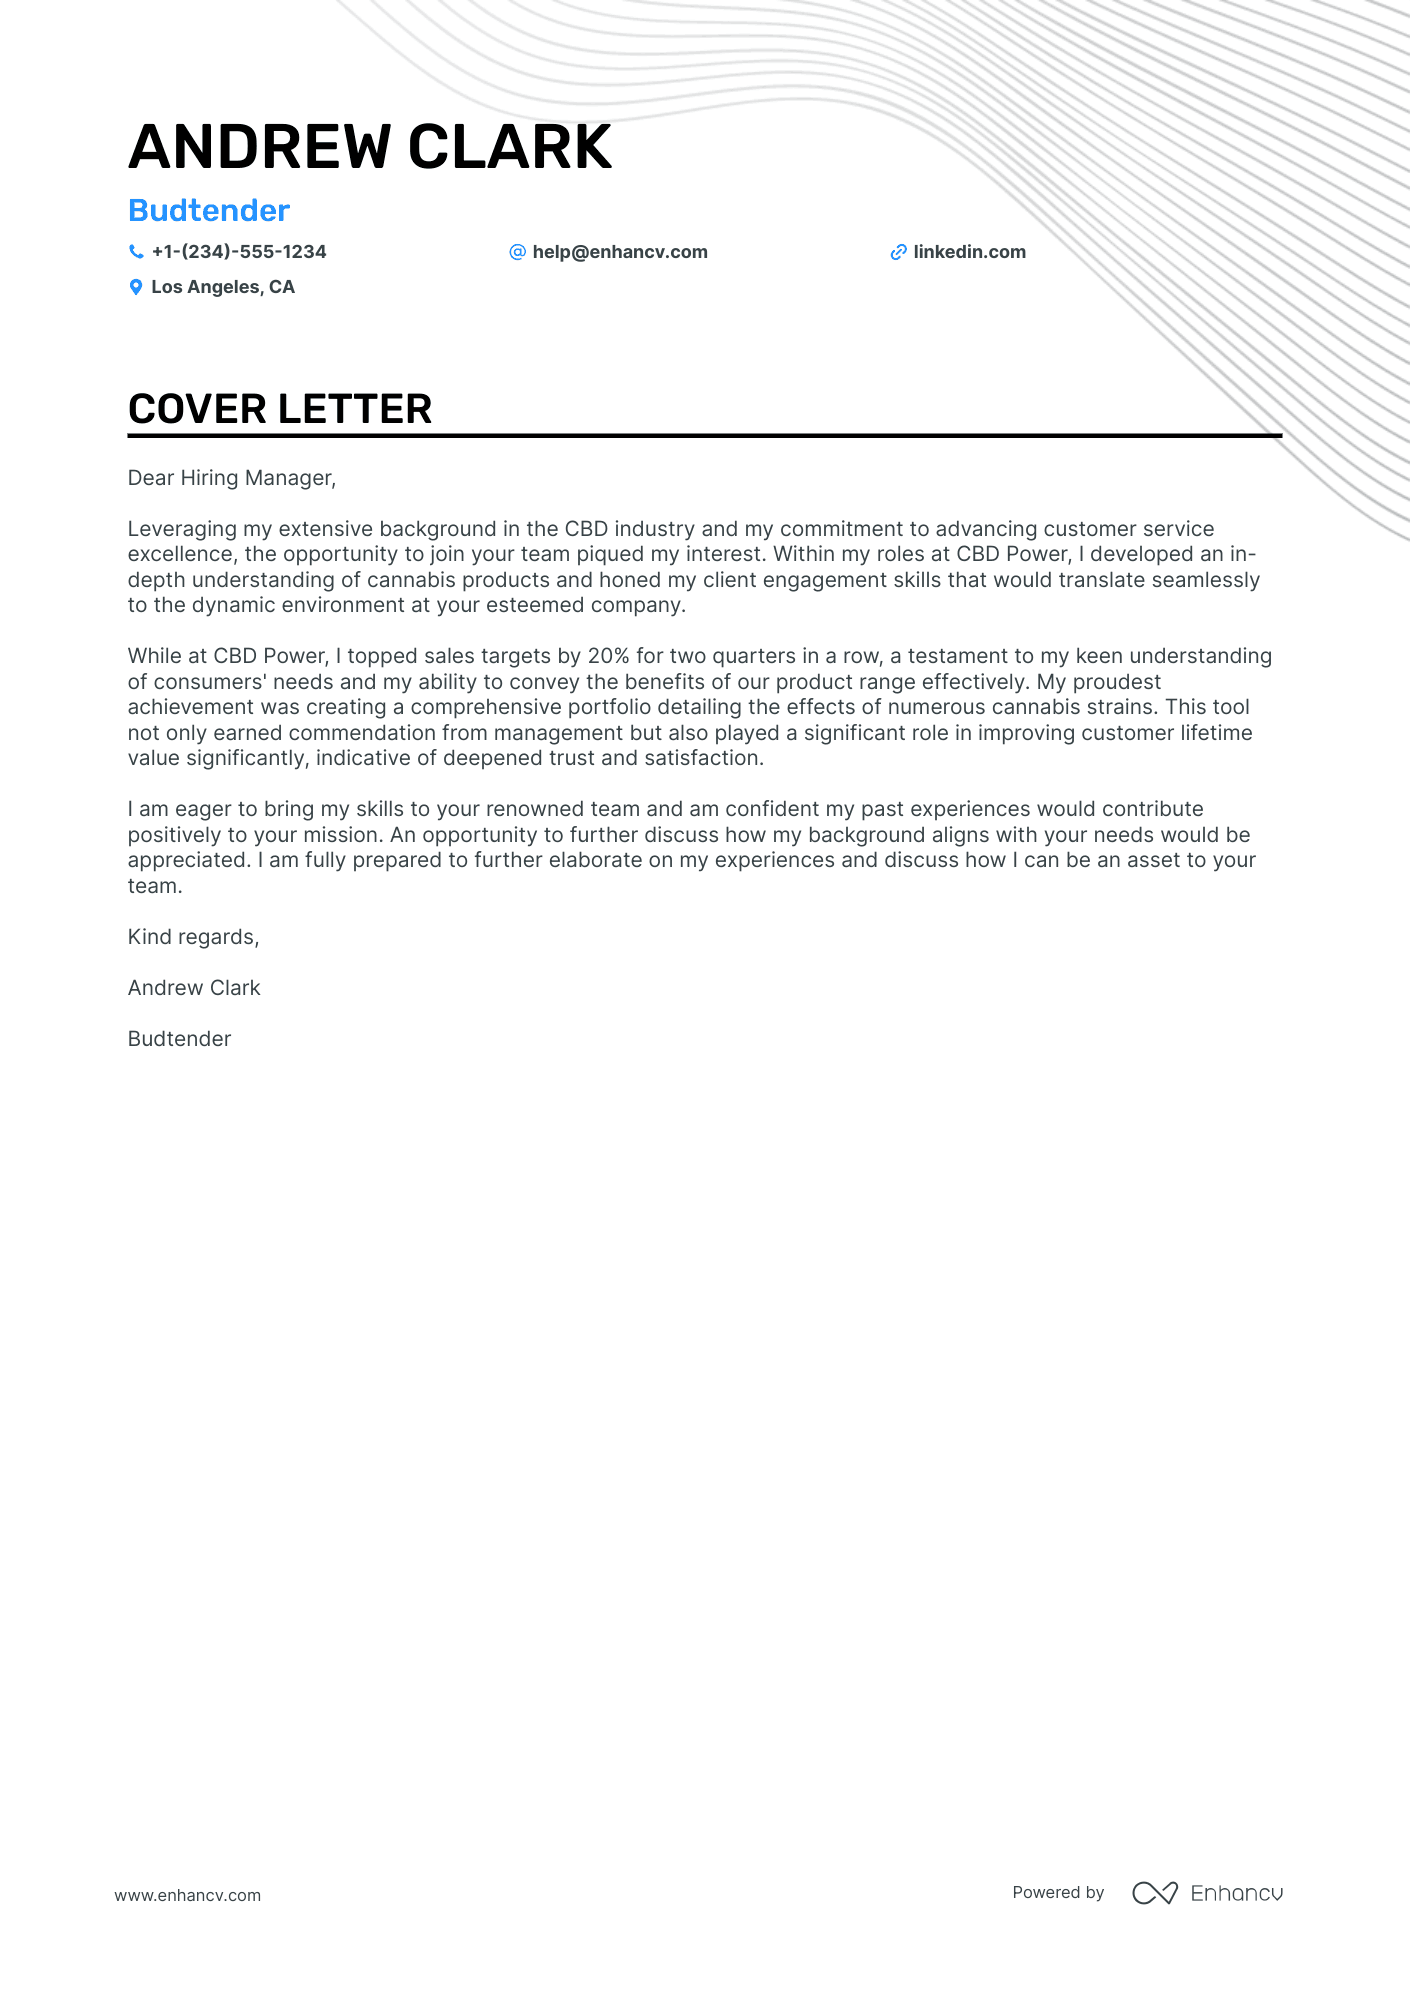 Budtender cover letter